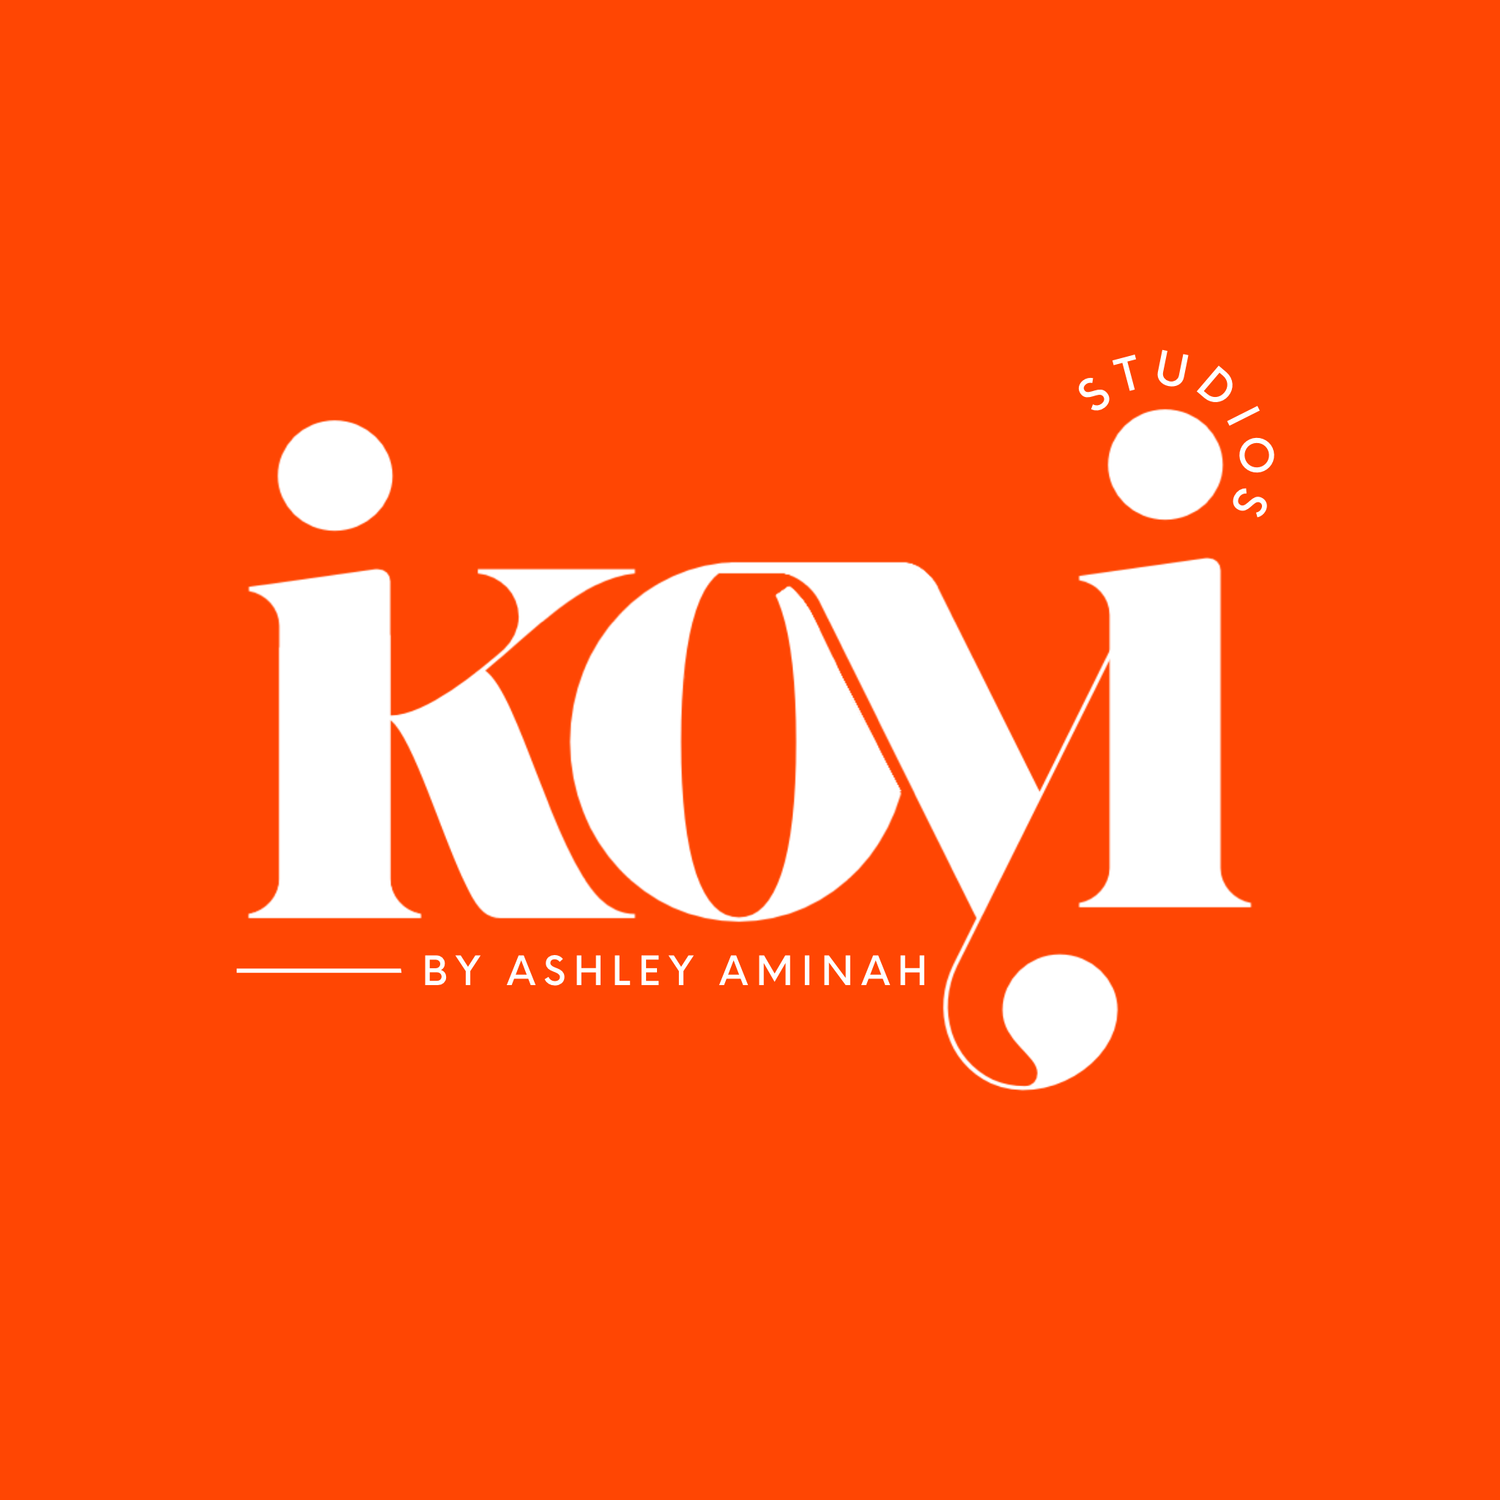 Ikoyi Studios by Ashley Aminah Austin, Texas 